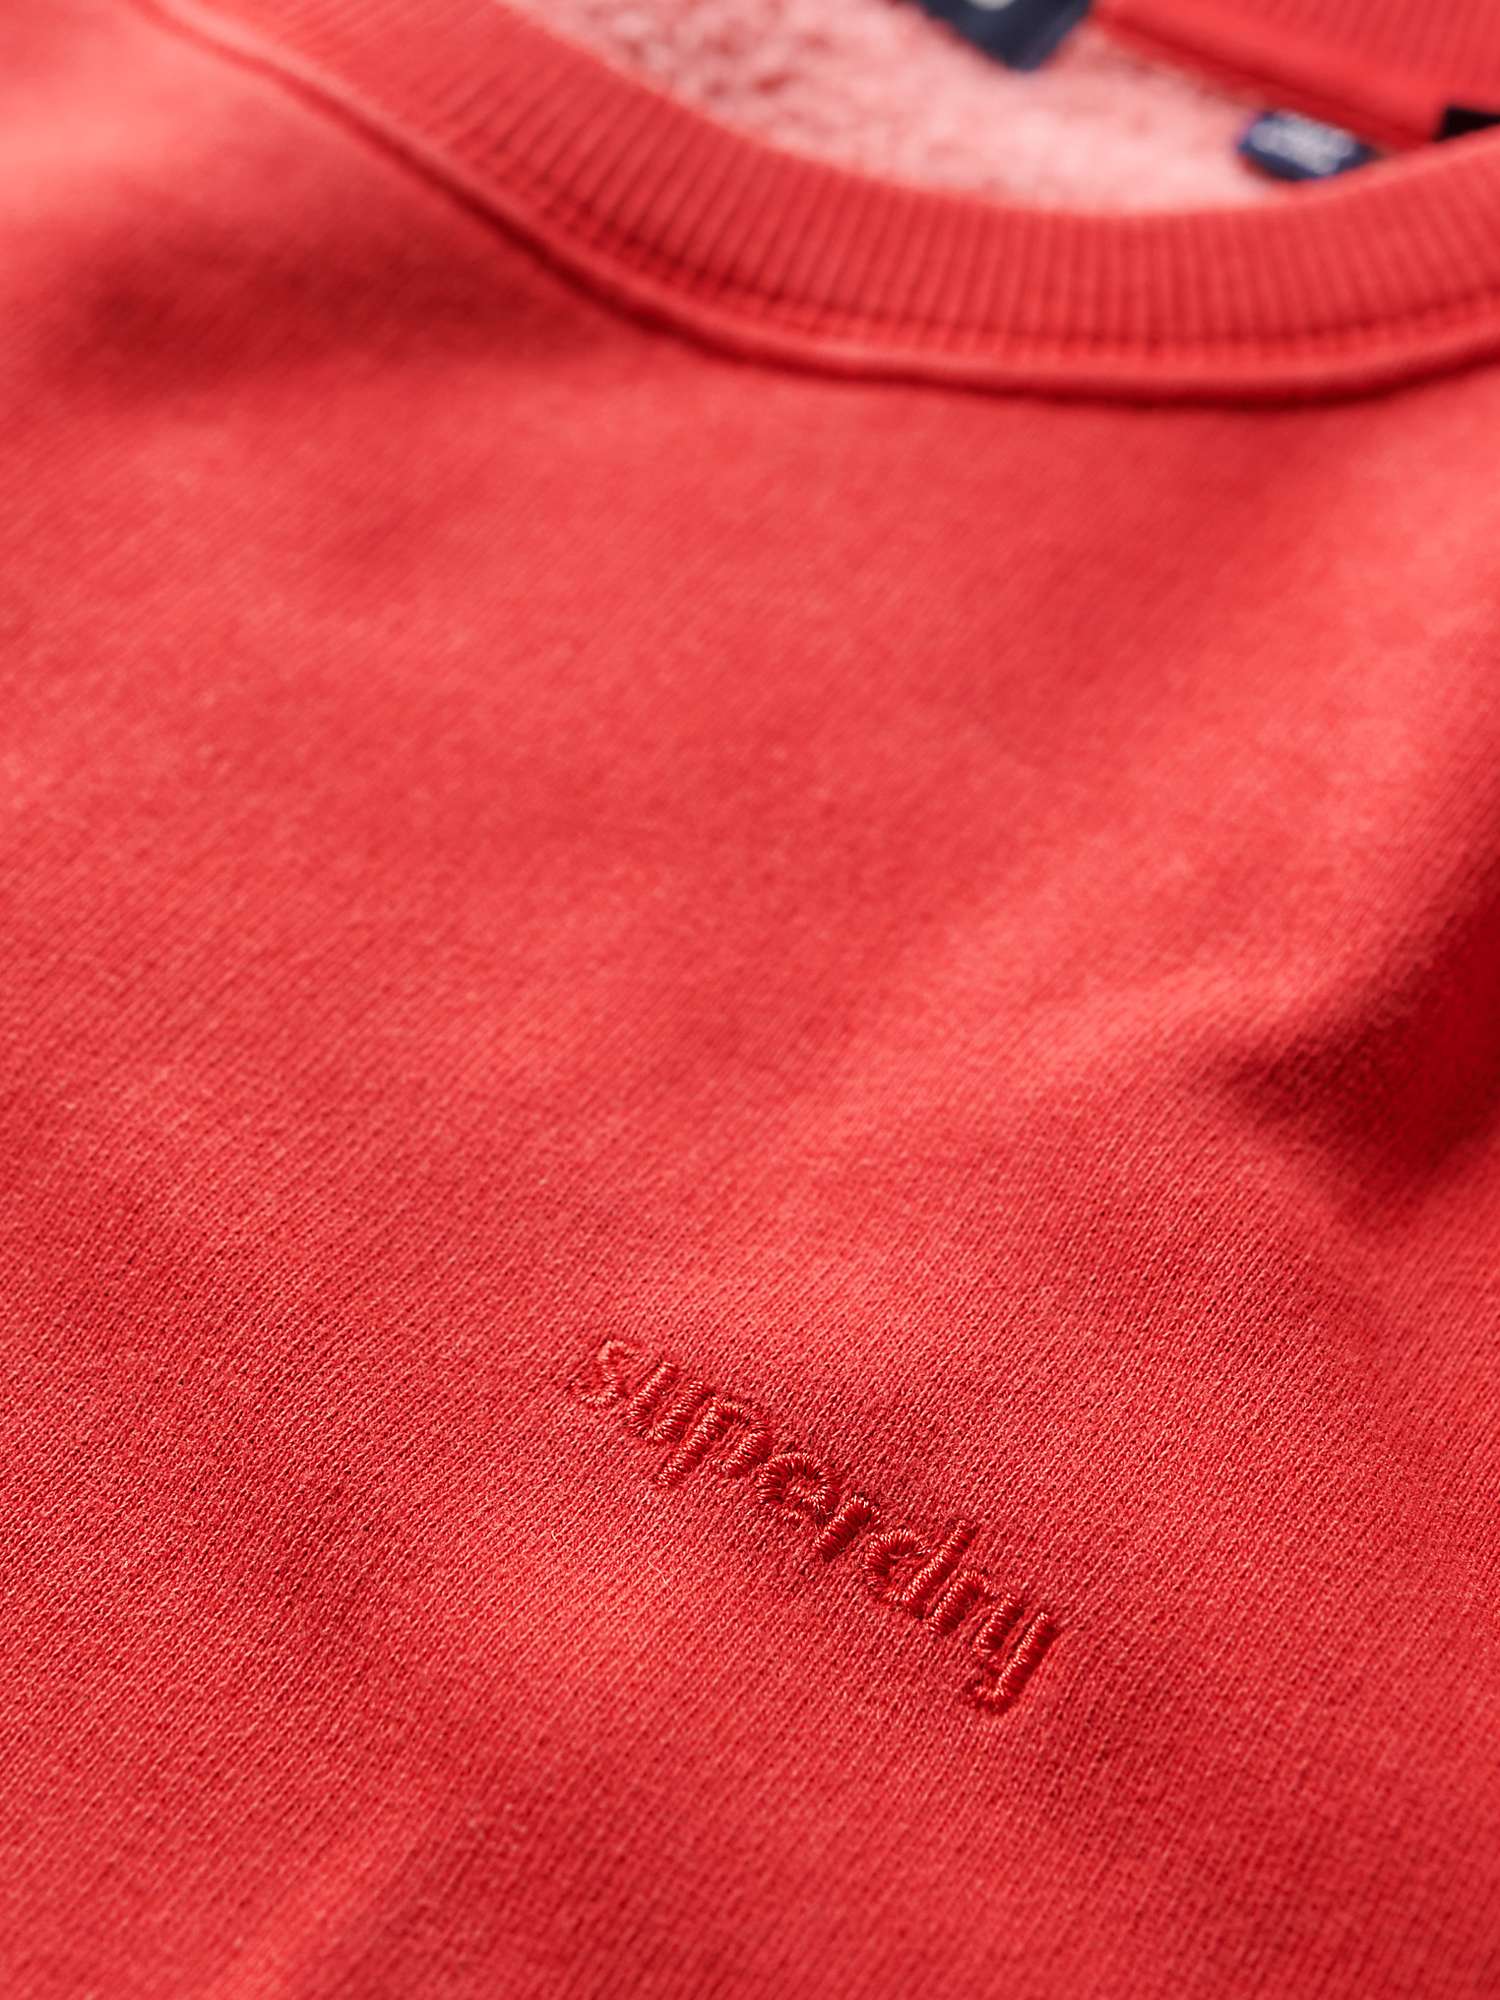 Buy Superdry Vintage washed Cotton Sweatshirt Online at johnlewis.com